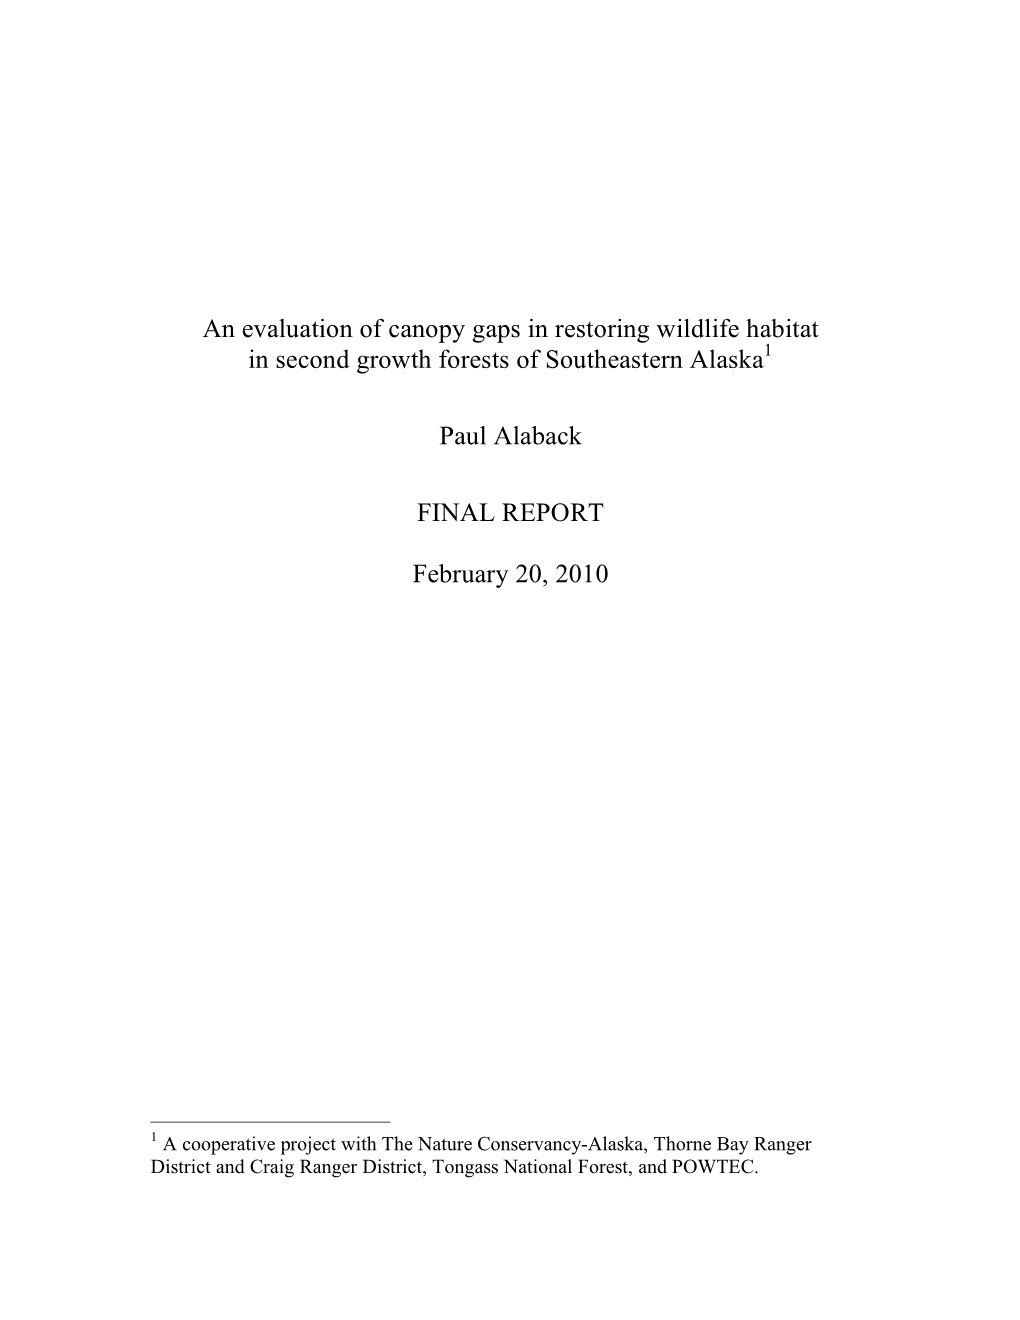 Alabak Conopy Gap Study Final Report